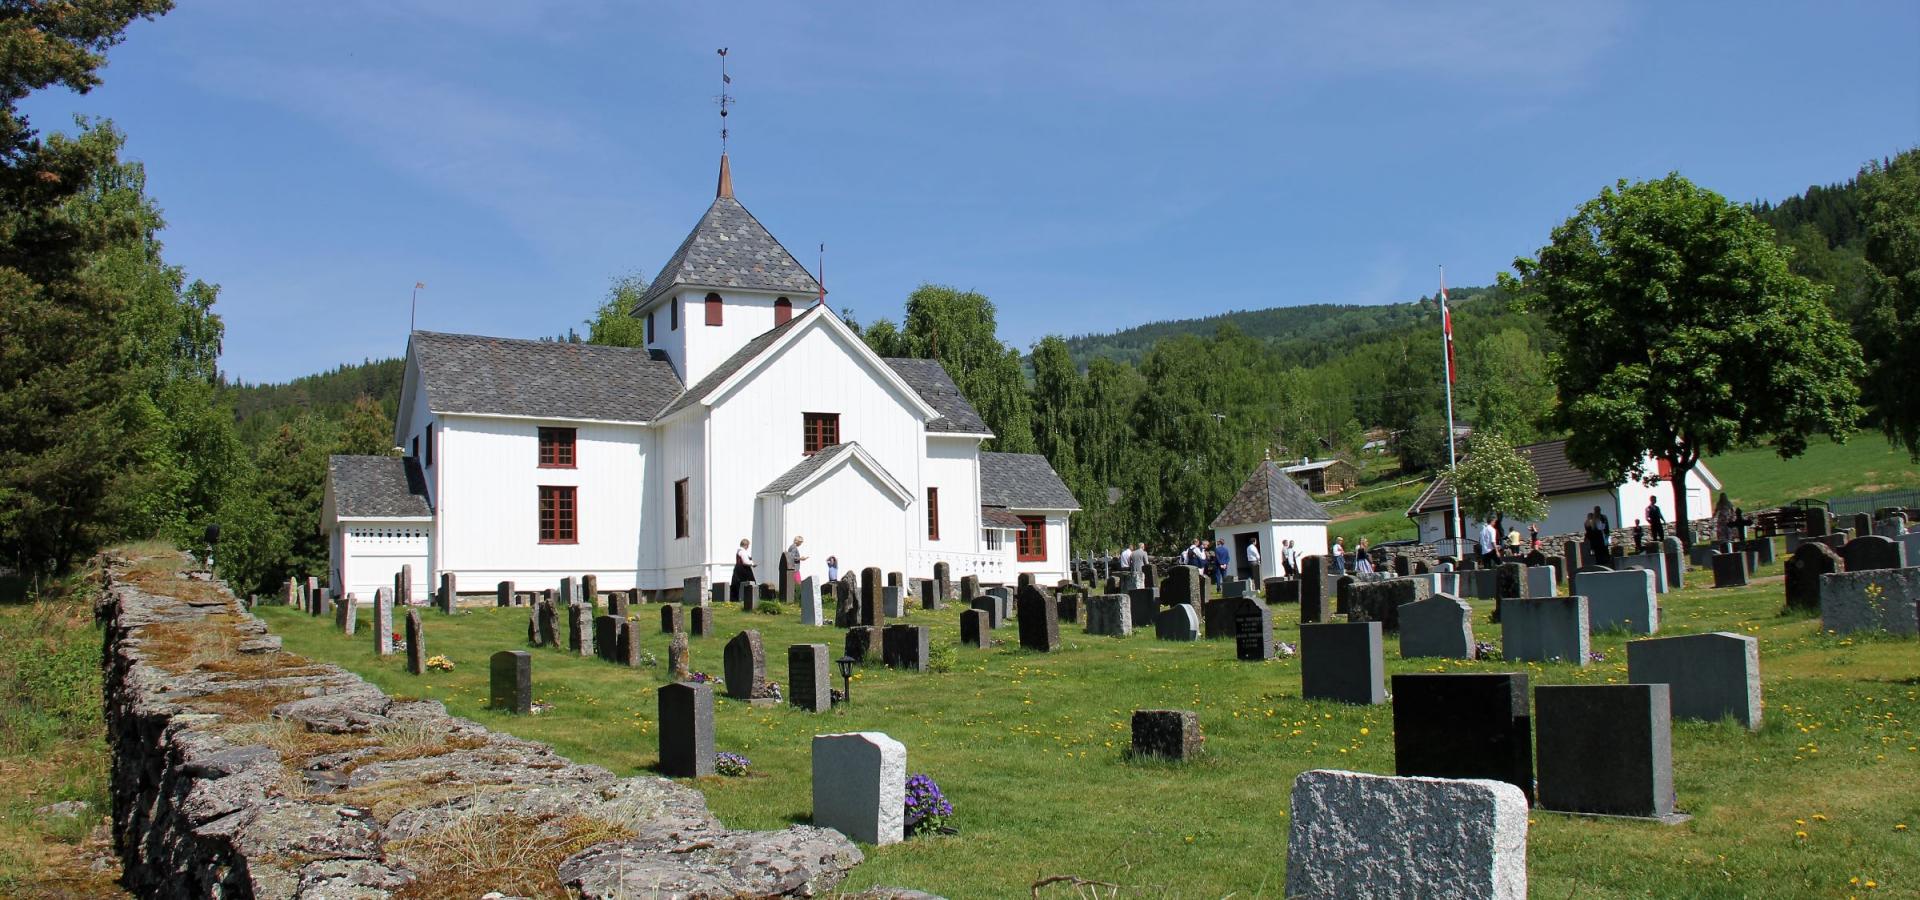 Kirke i Gudbrandsdalen